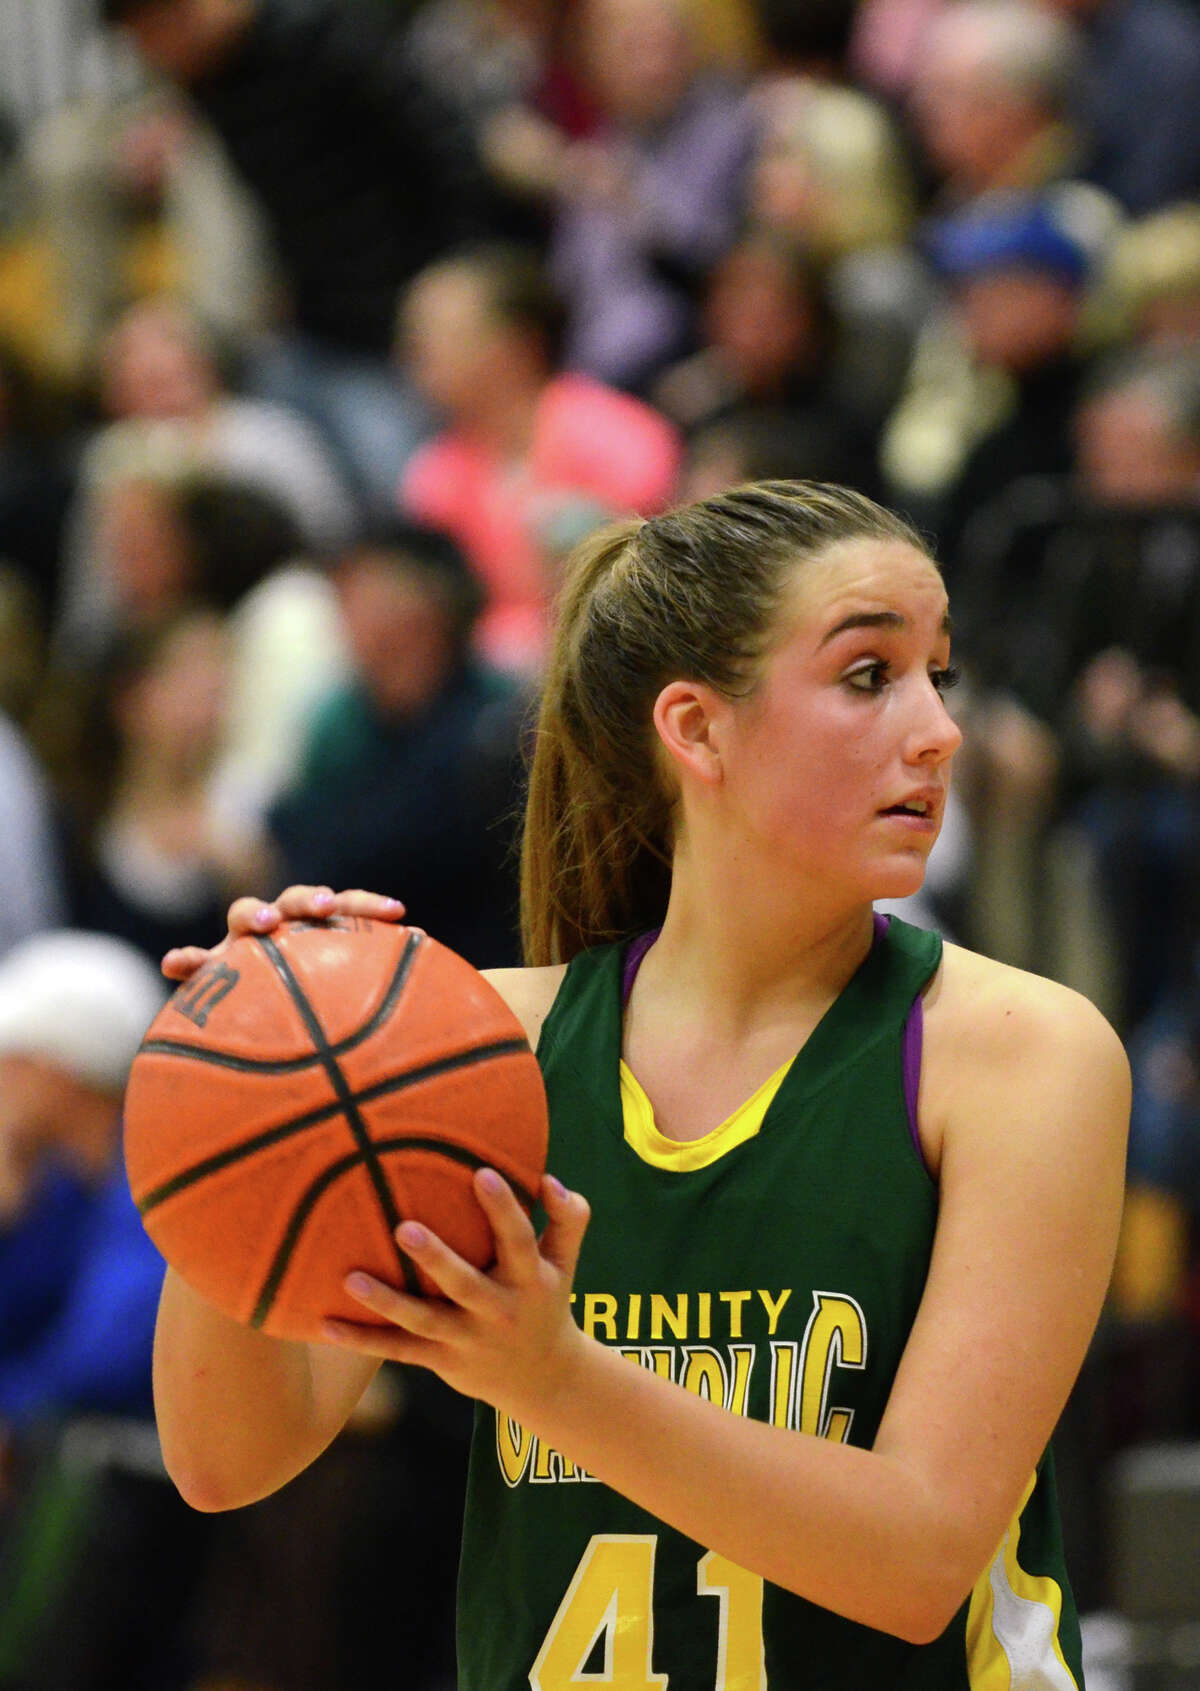 Trinity Catholic's Anne Margaret Eilertsen (41) controls the ball during the girls basketball game against Darien at Darien High School on Tuesday, Jan. 22, 2013.